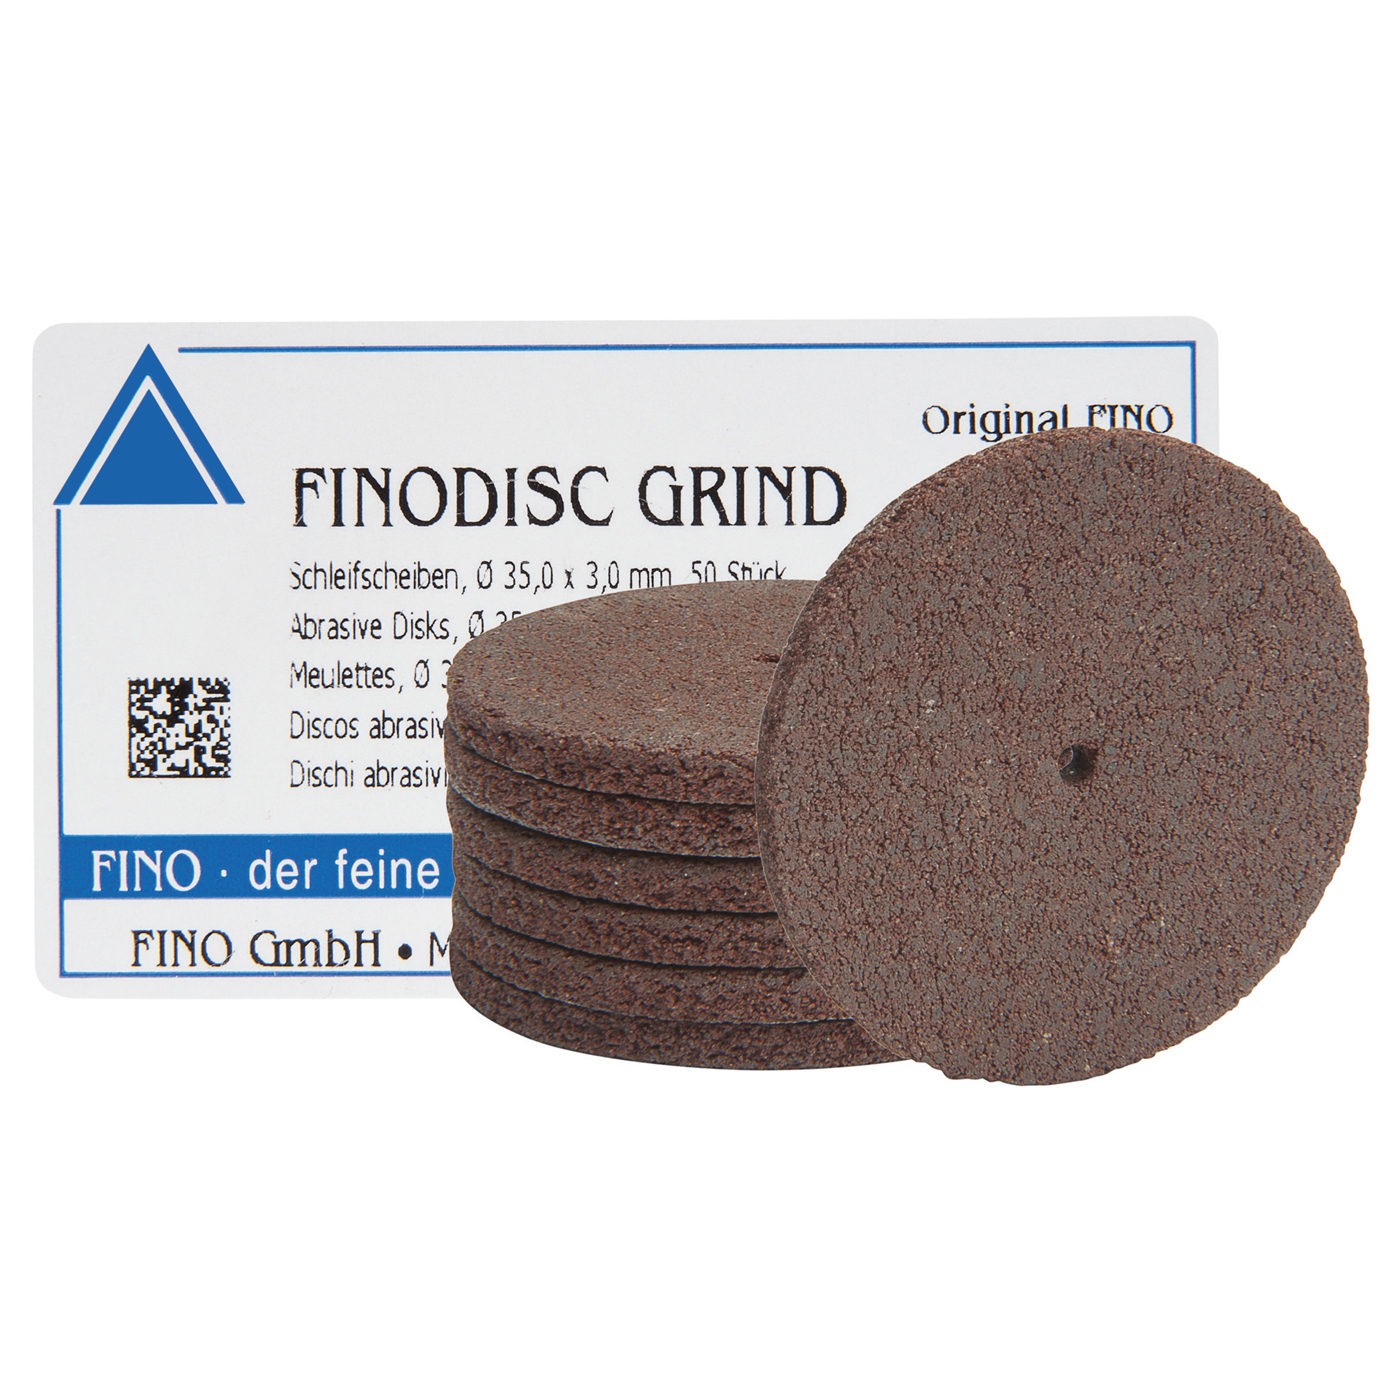 FINODISC GRIND Grinding Discs, ø 35 x 3.0 mm - 50 pieces